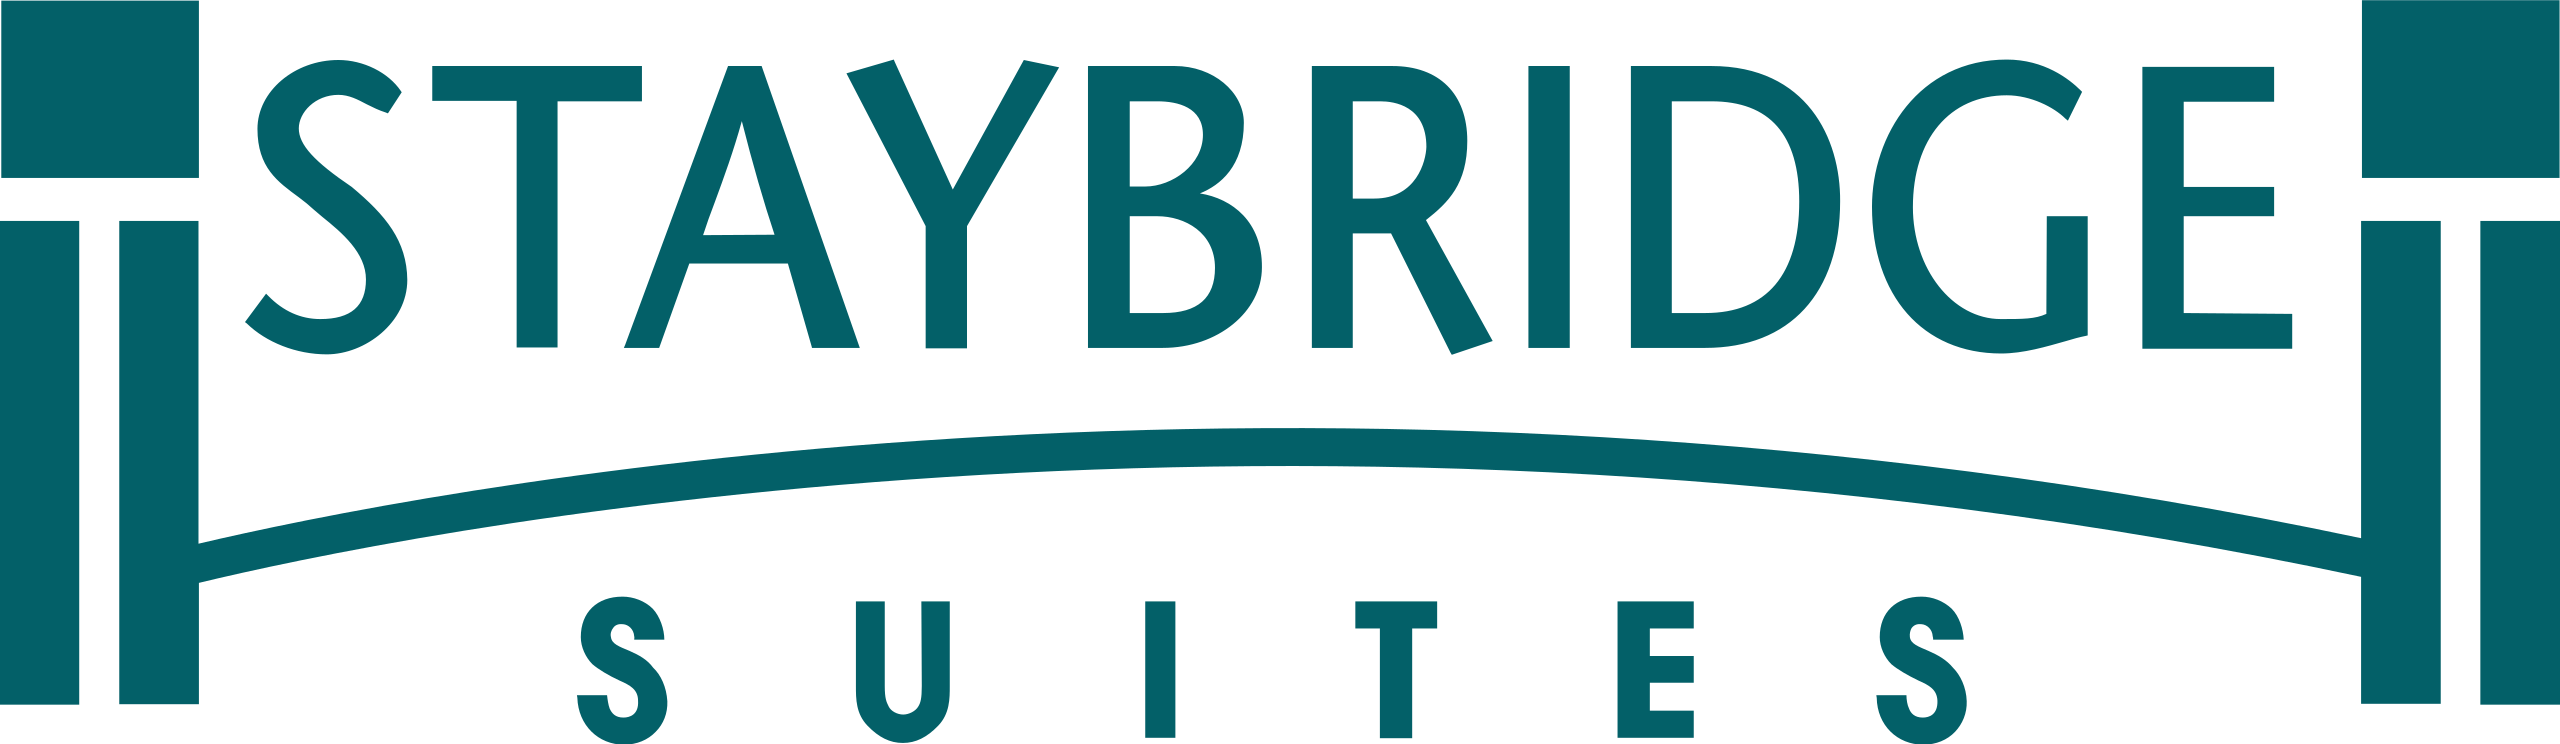 Staybridge Suites Brand Logo